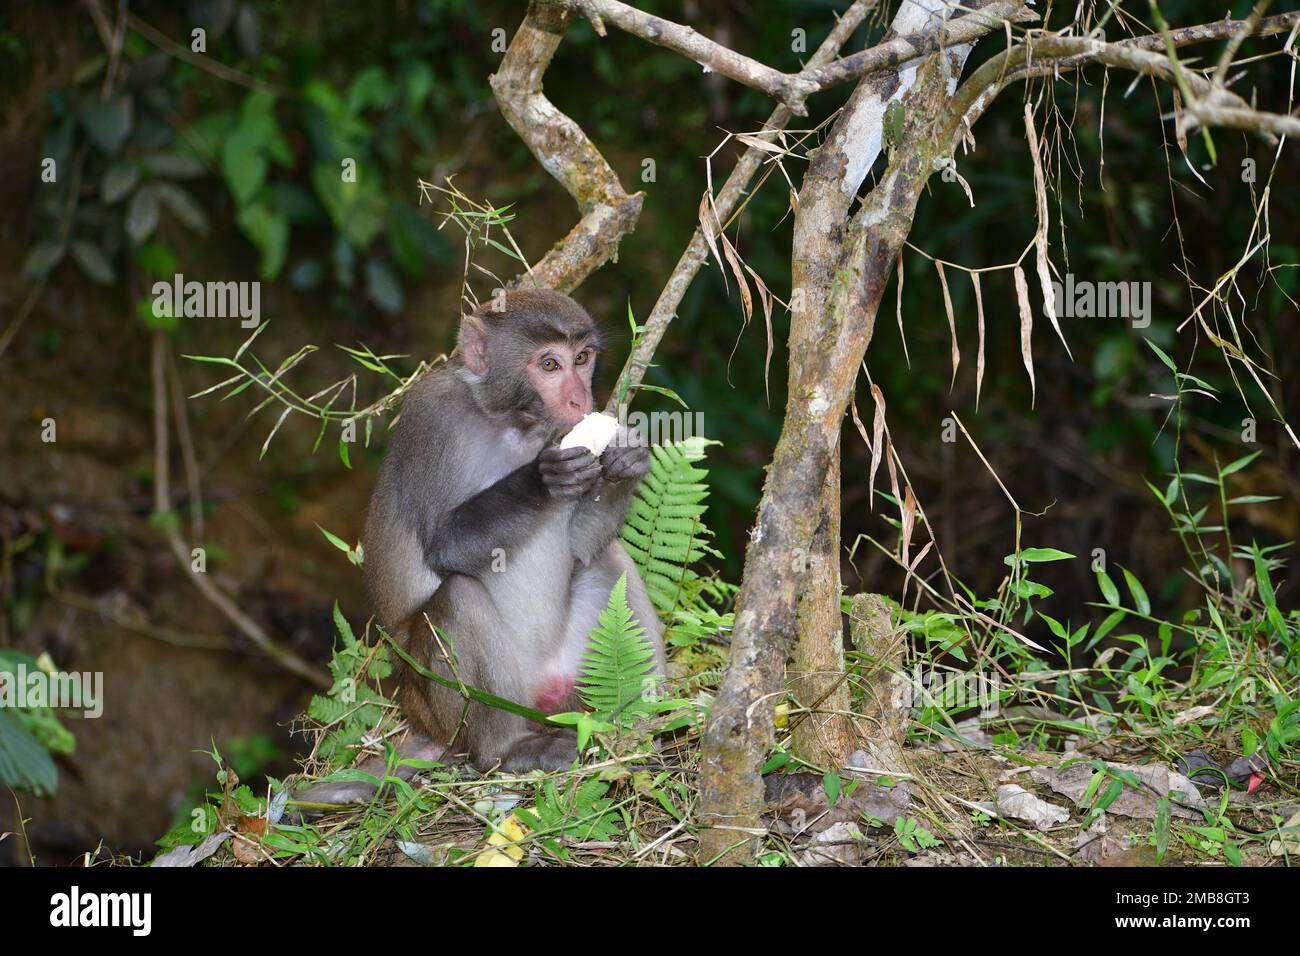 Rhesus Monkey eating banana in Lawachara National Park Bangladesh Stock Photo